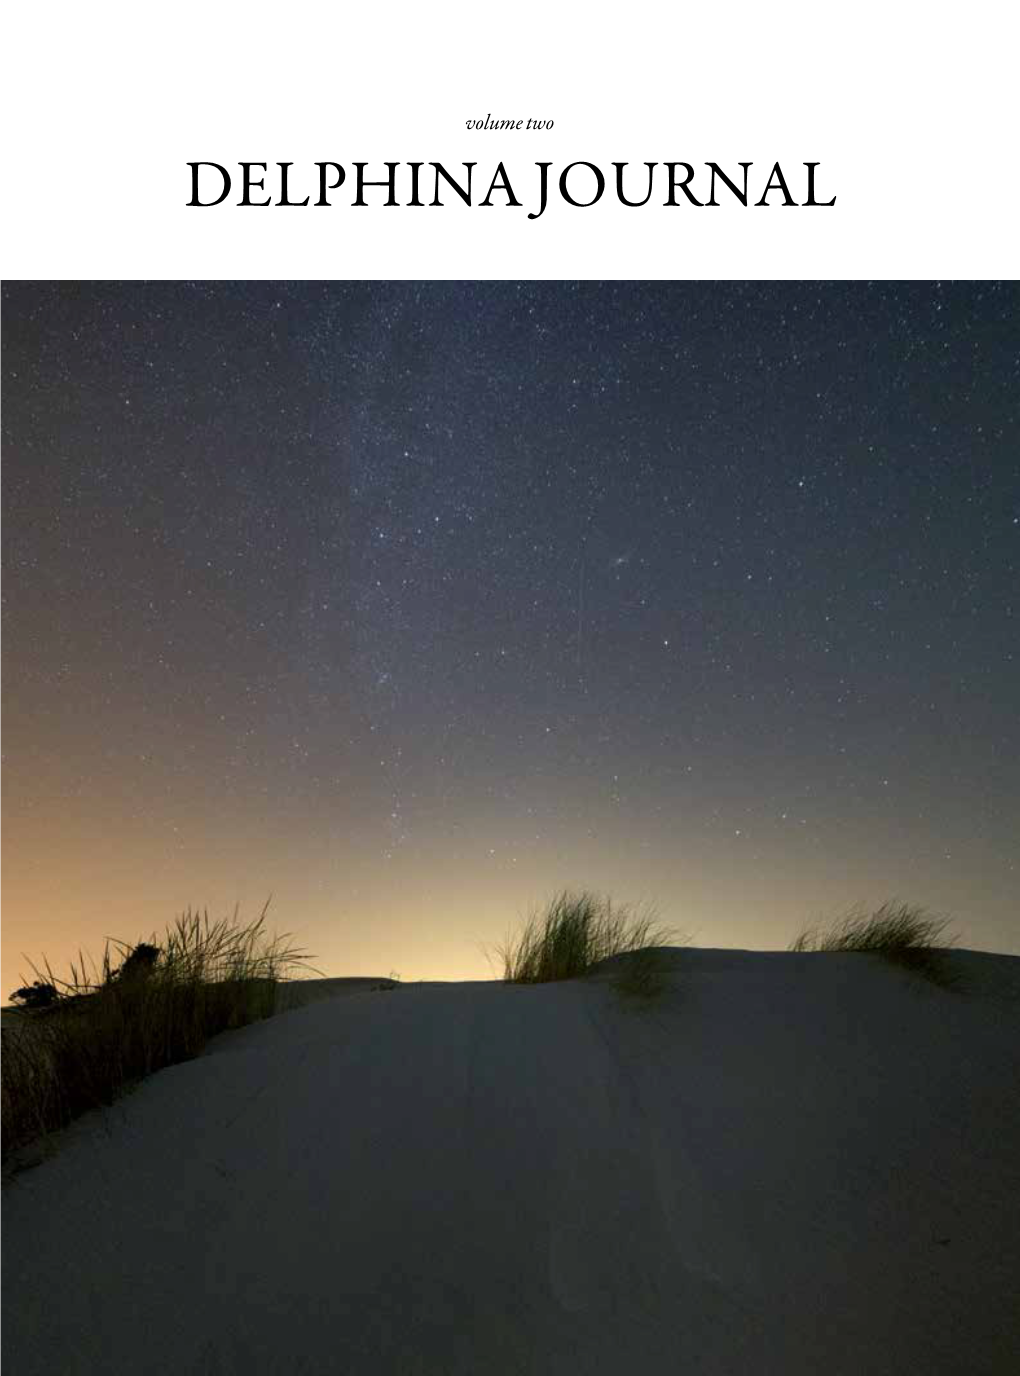 Delphina Journal NOI GALLURESI 1 5 STELLE